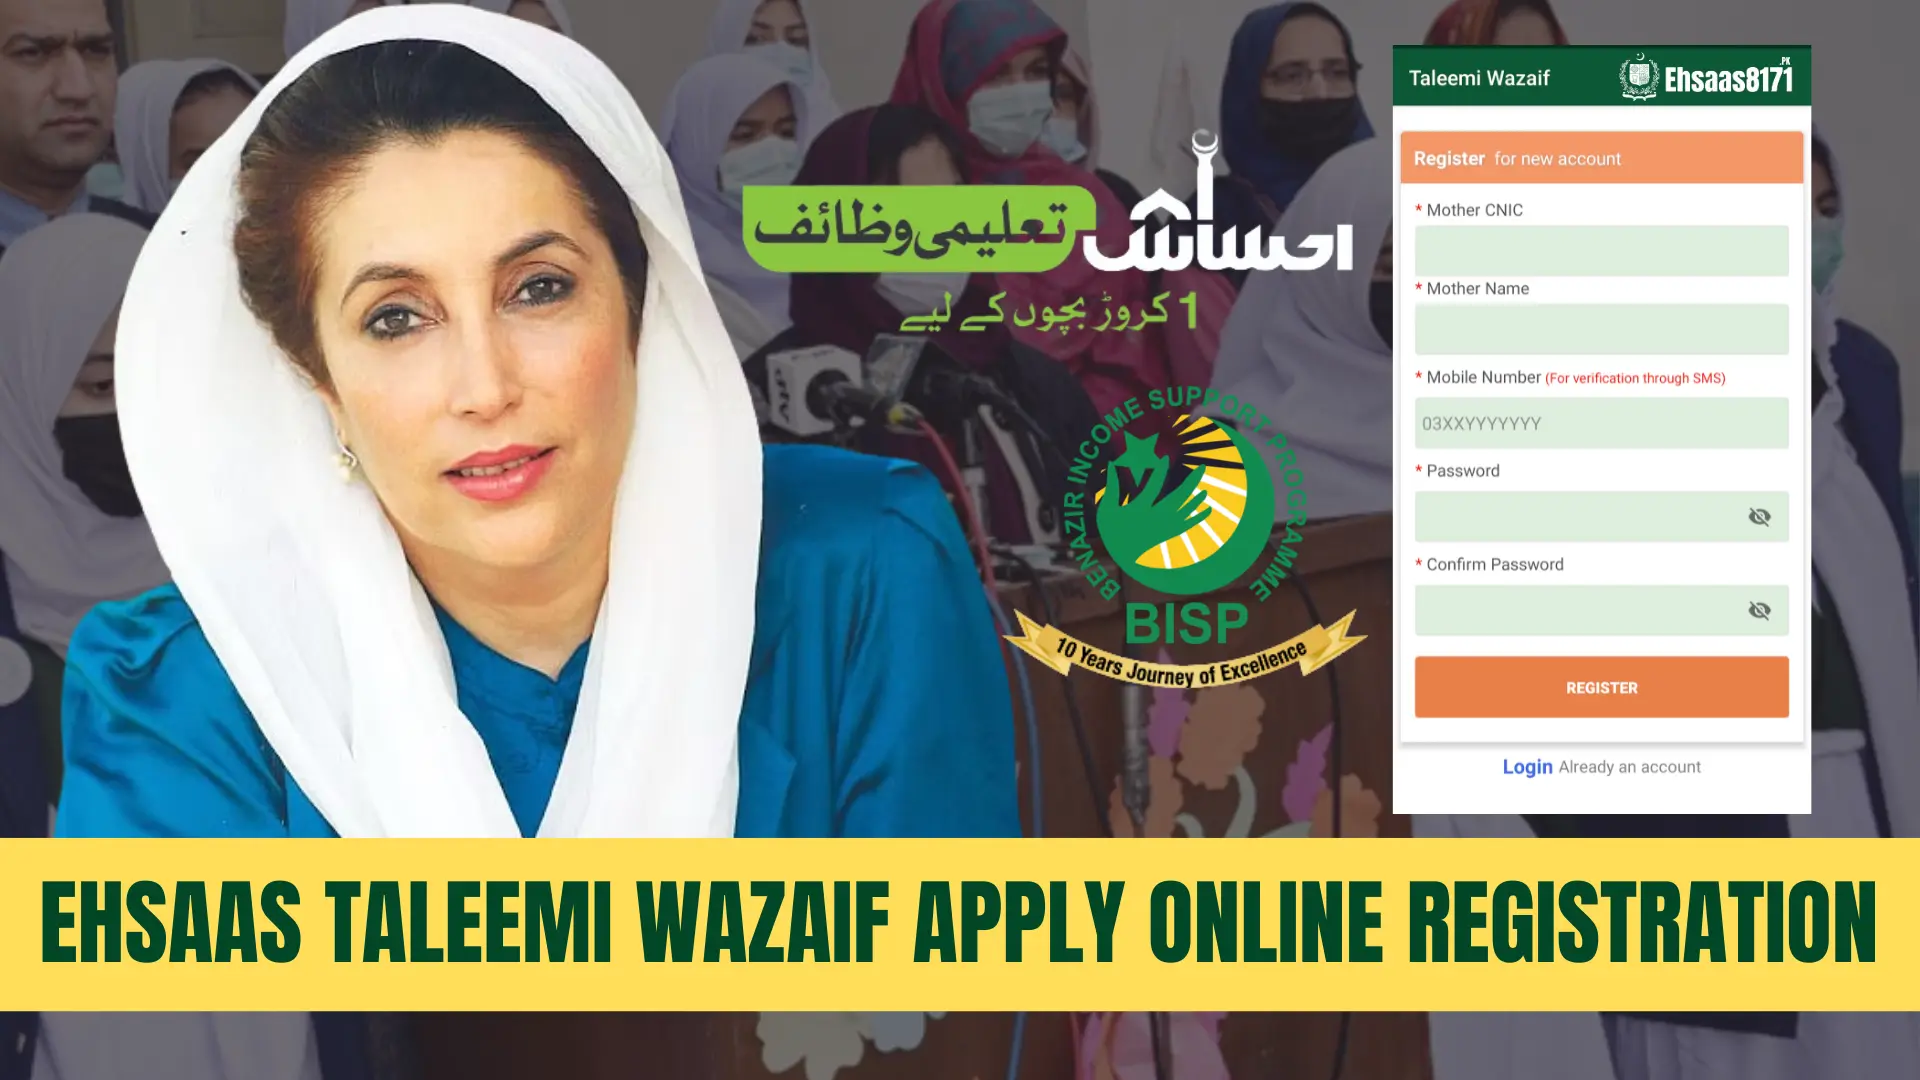 Ehsaas Taleemi Wazaif Apply Online Registration